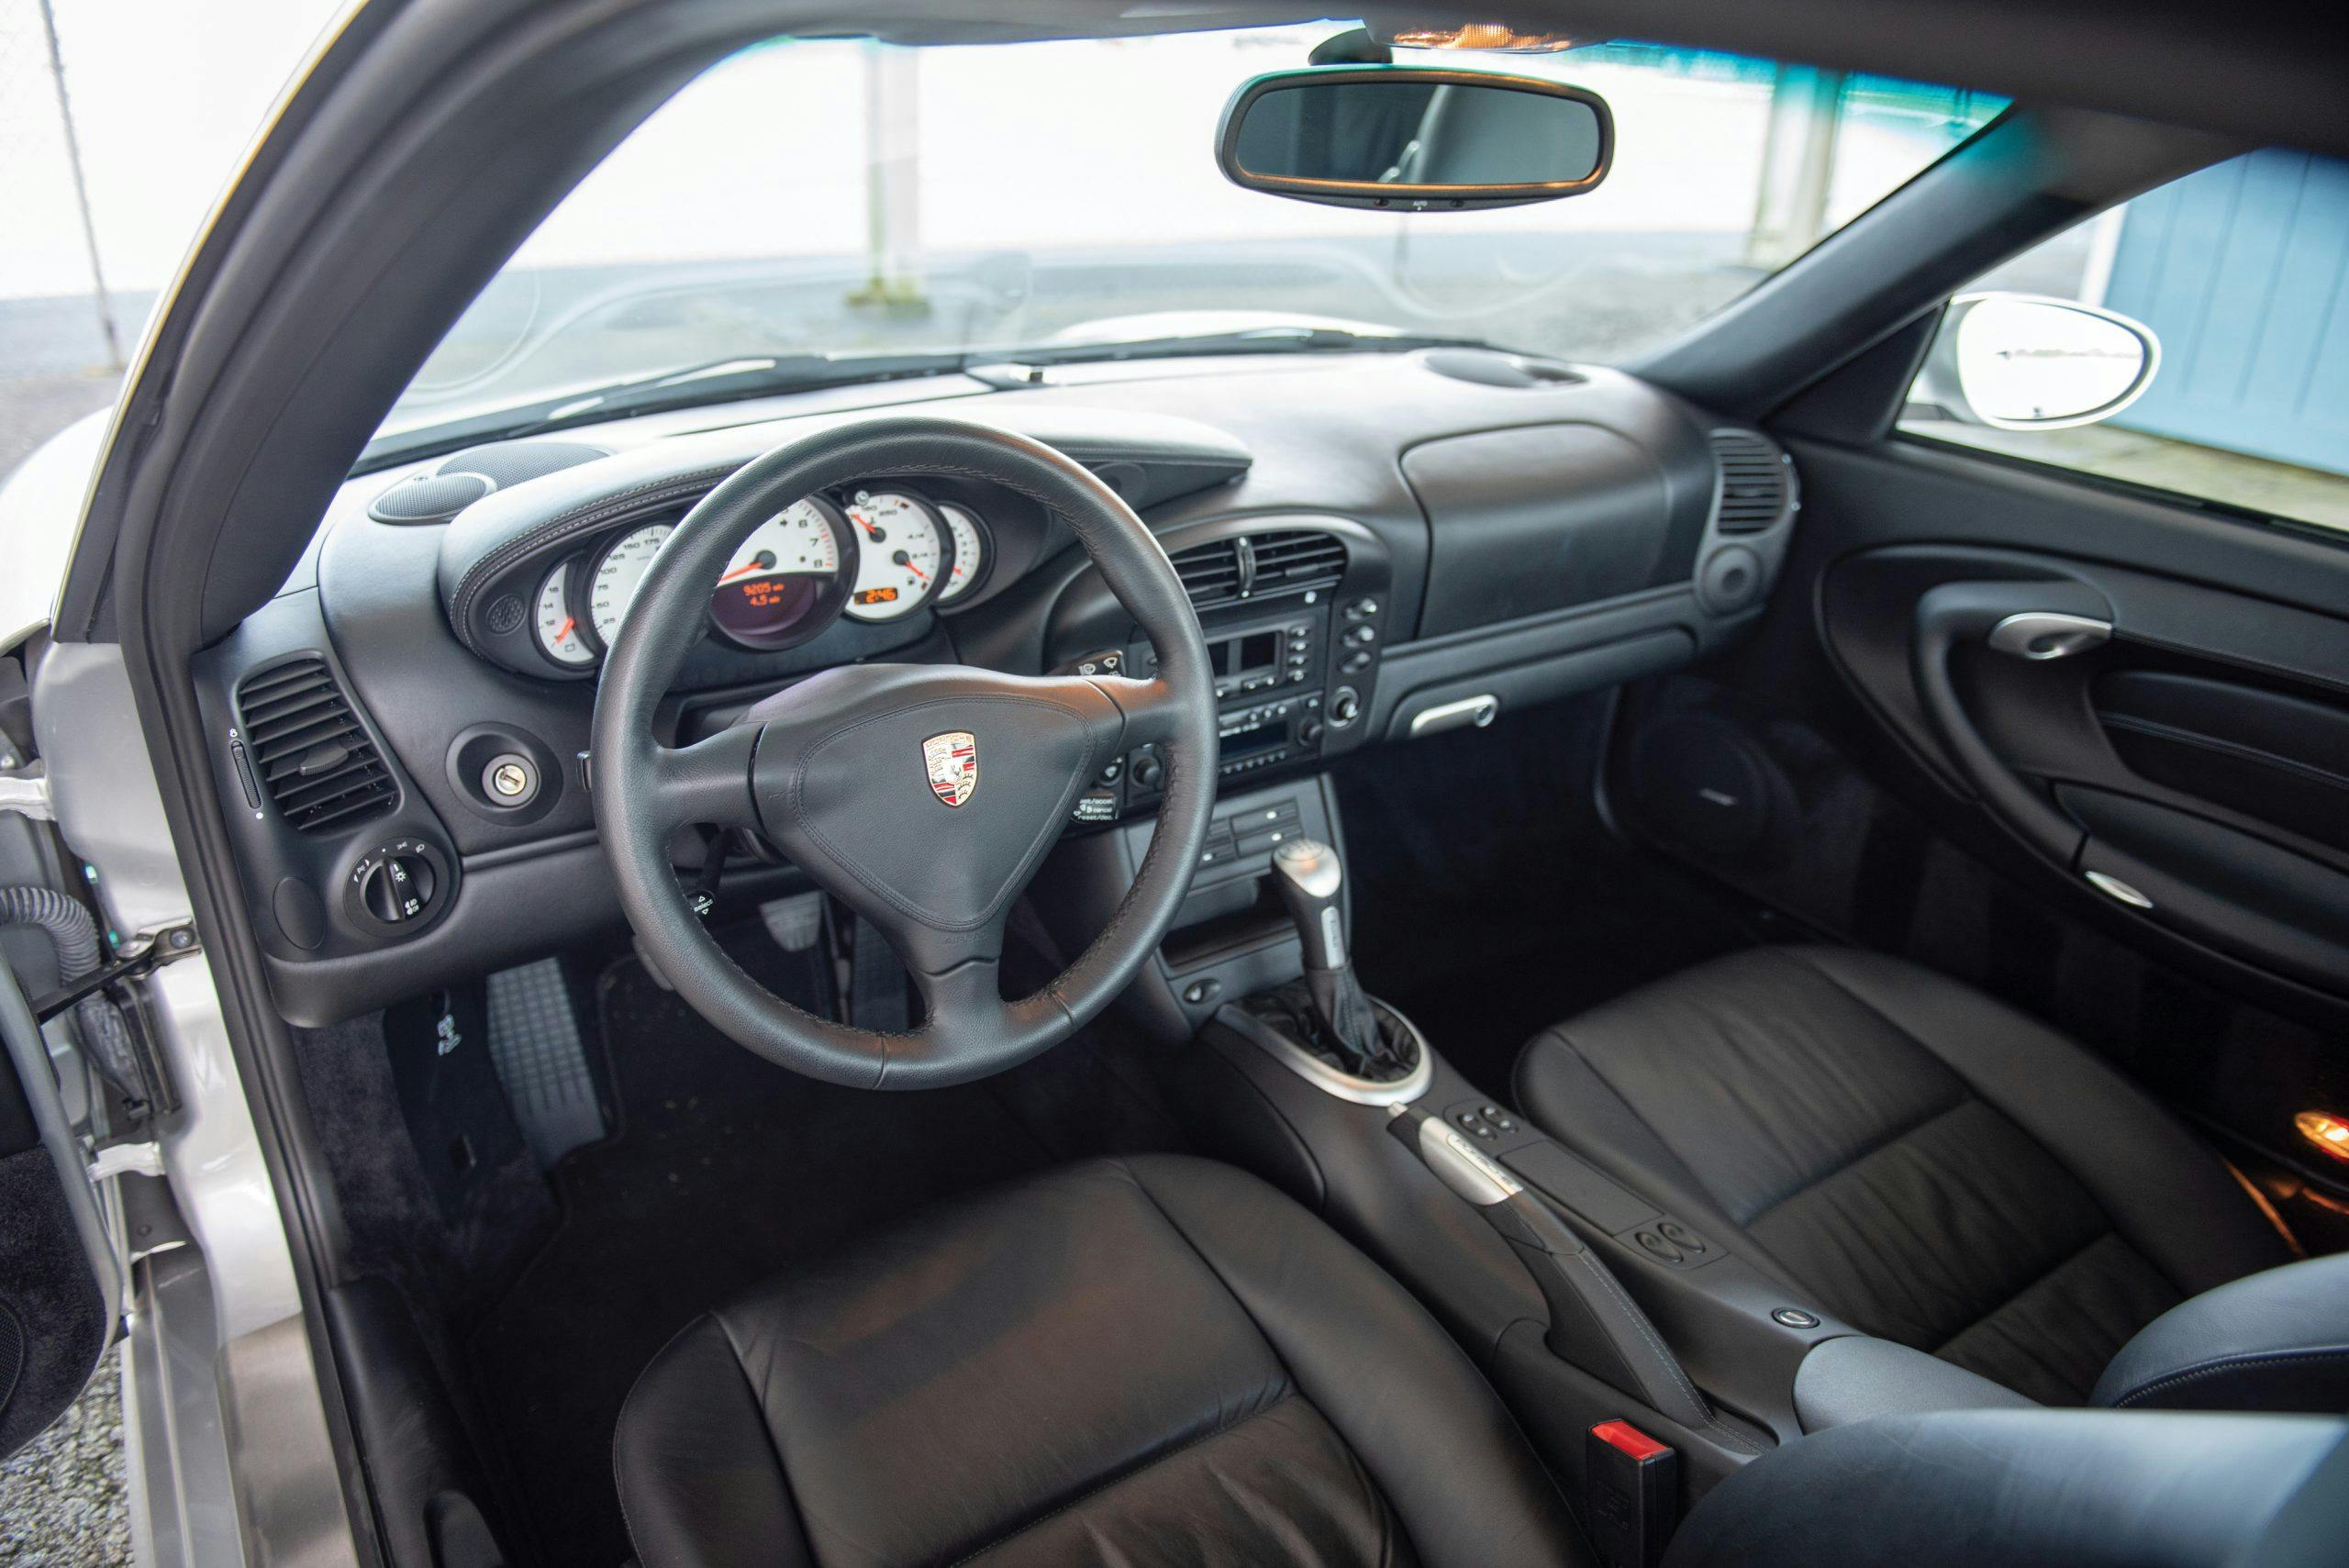 2002 Porsche 911 Turbo Coupe interior